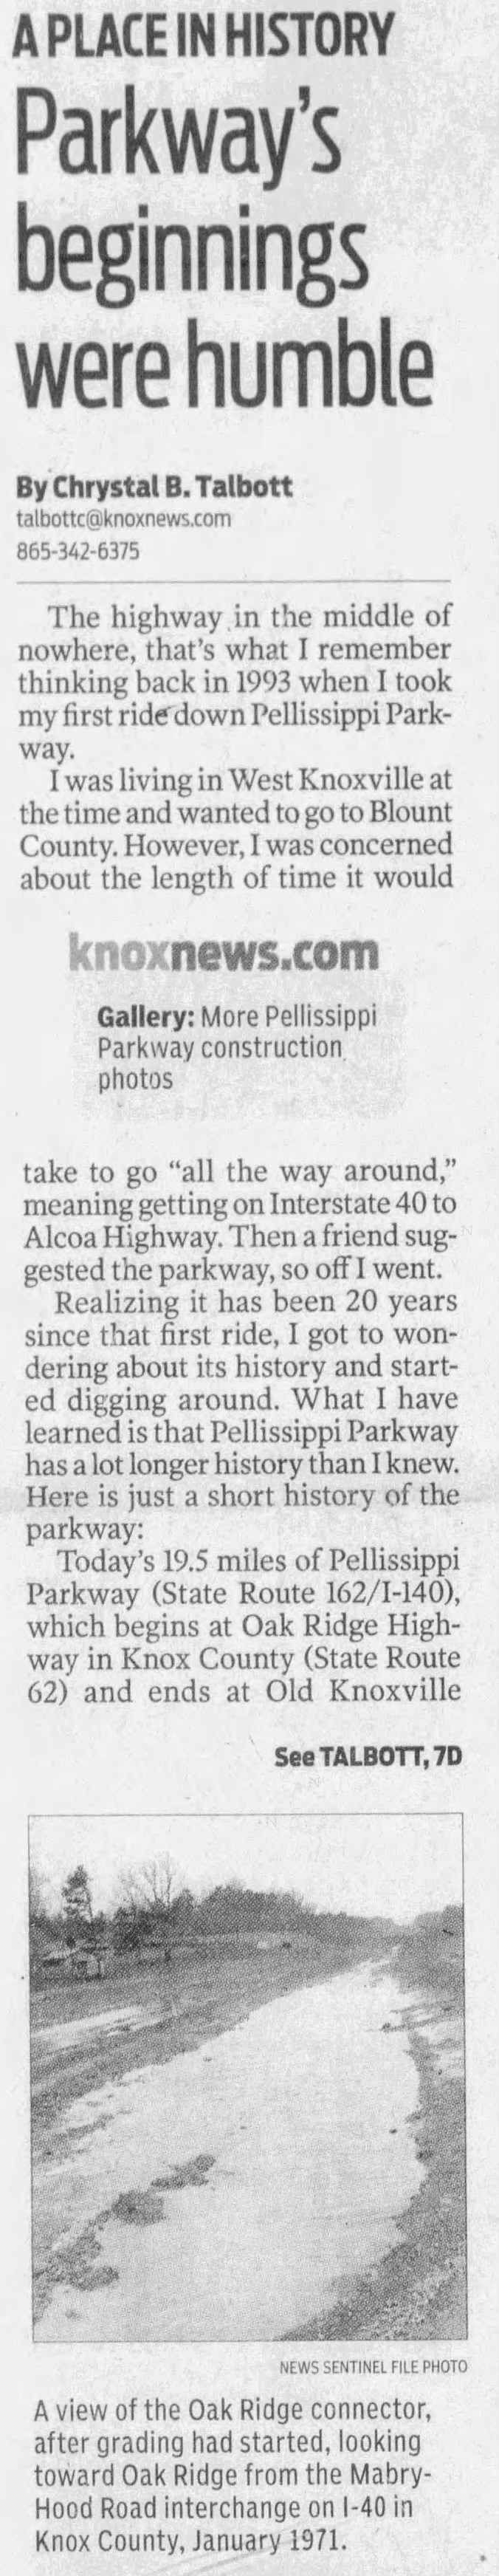 Parkway's beginnings were humble